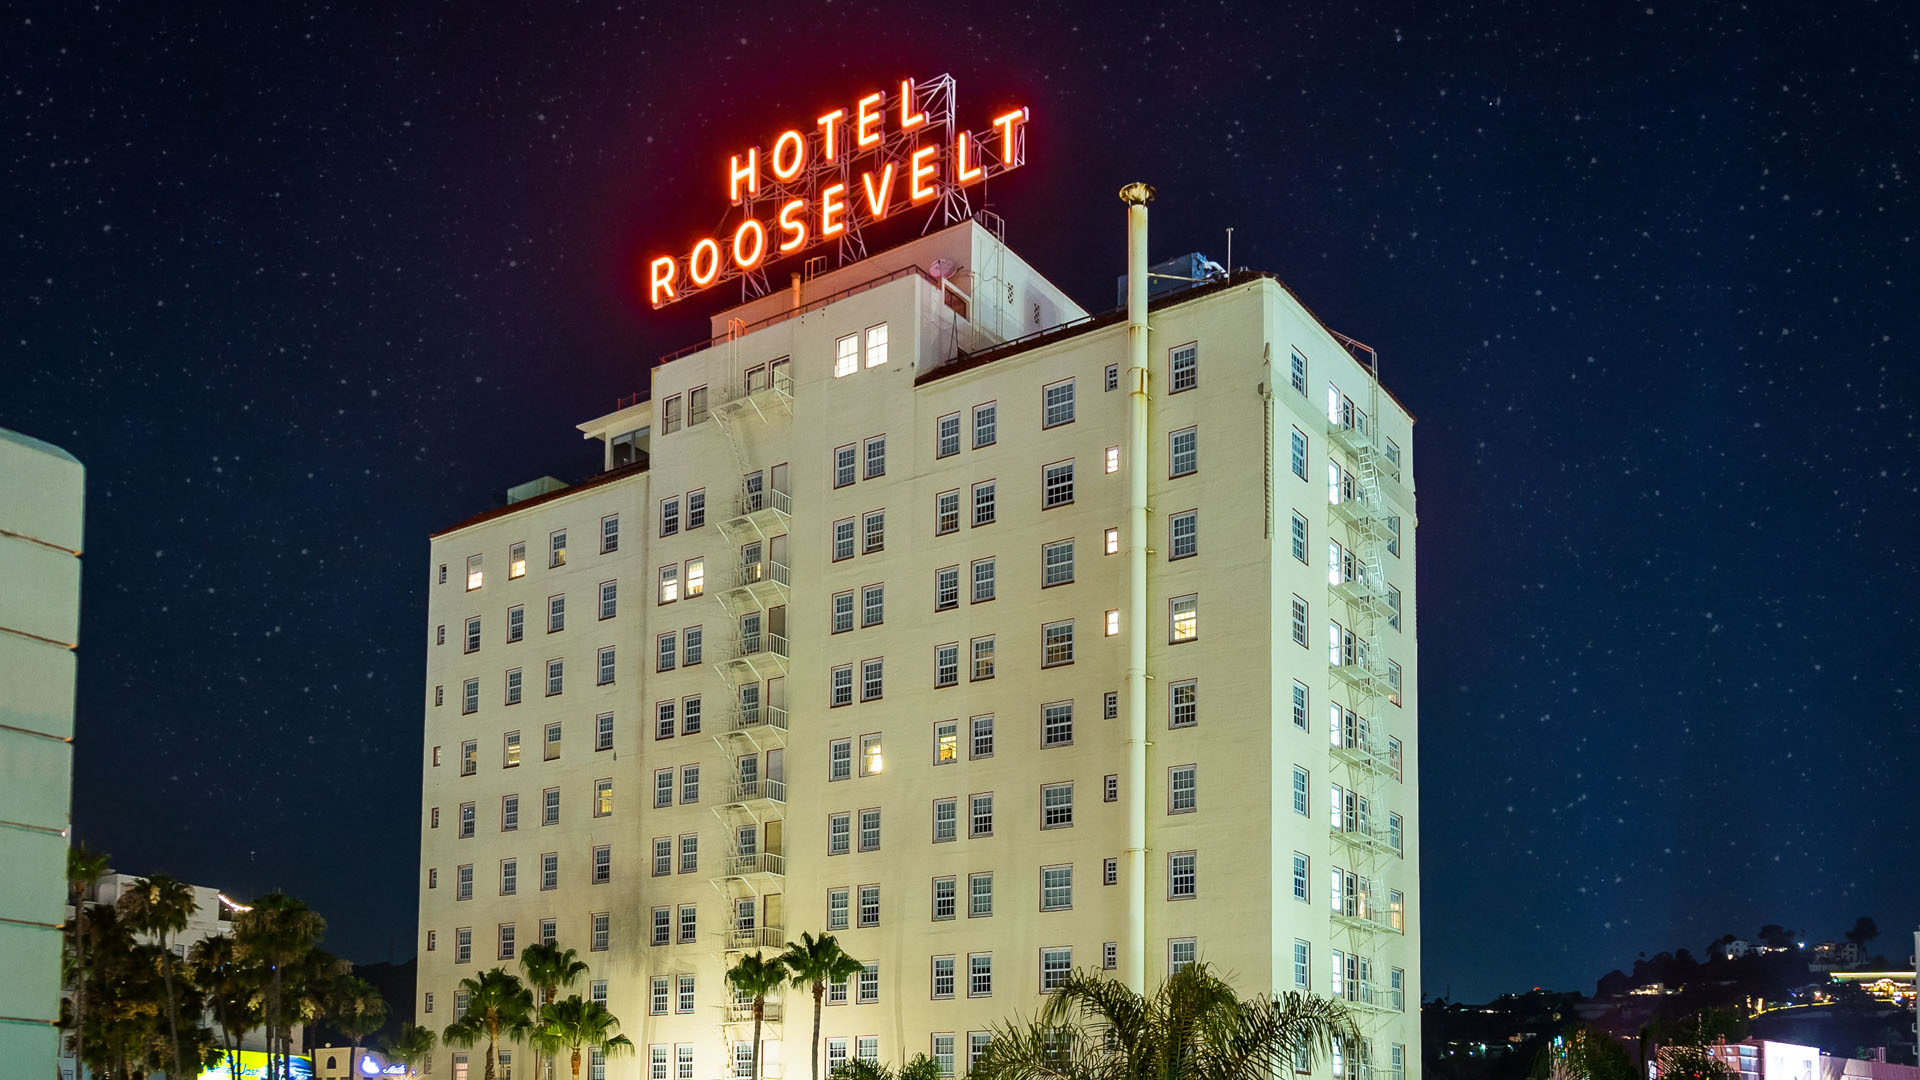 Hollywood Roosevelt | Los Angeles, CA | US Ghost Adventures